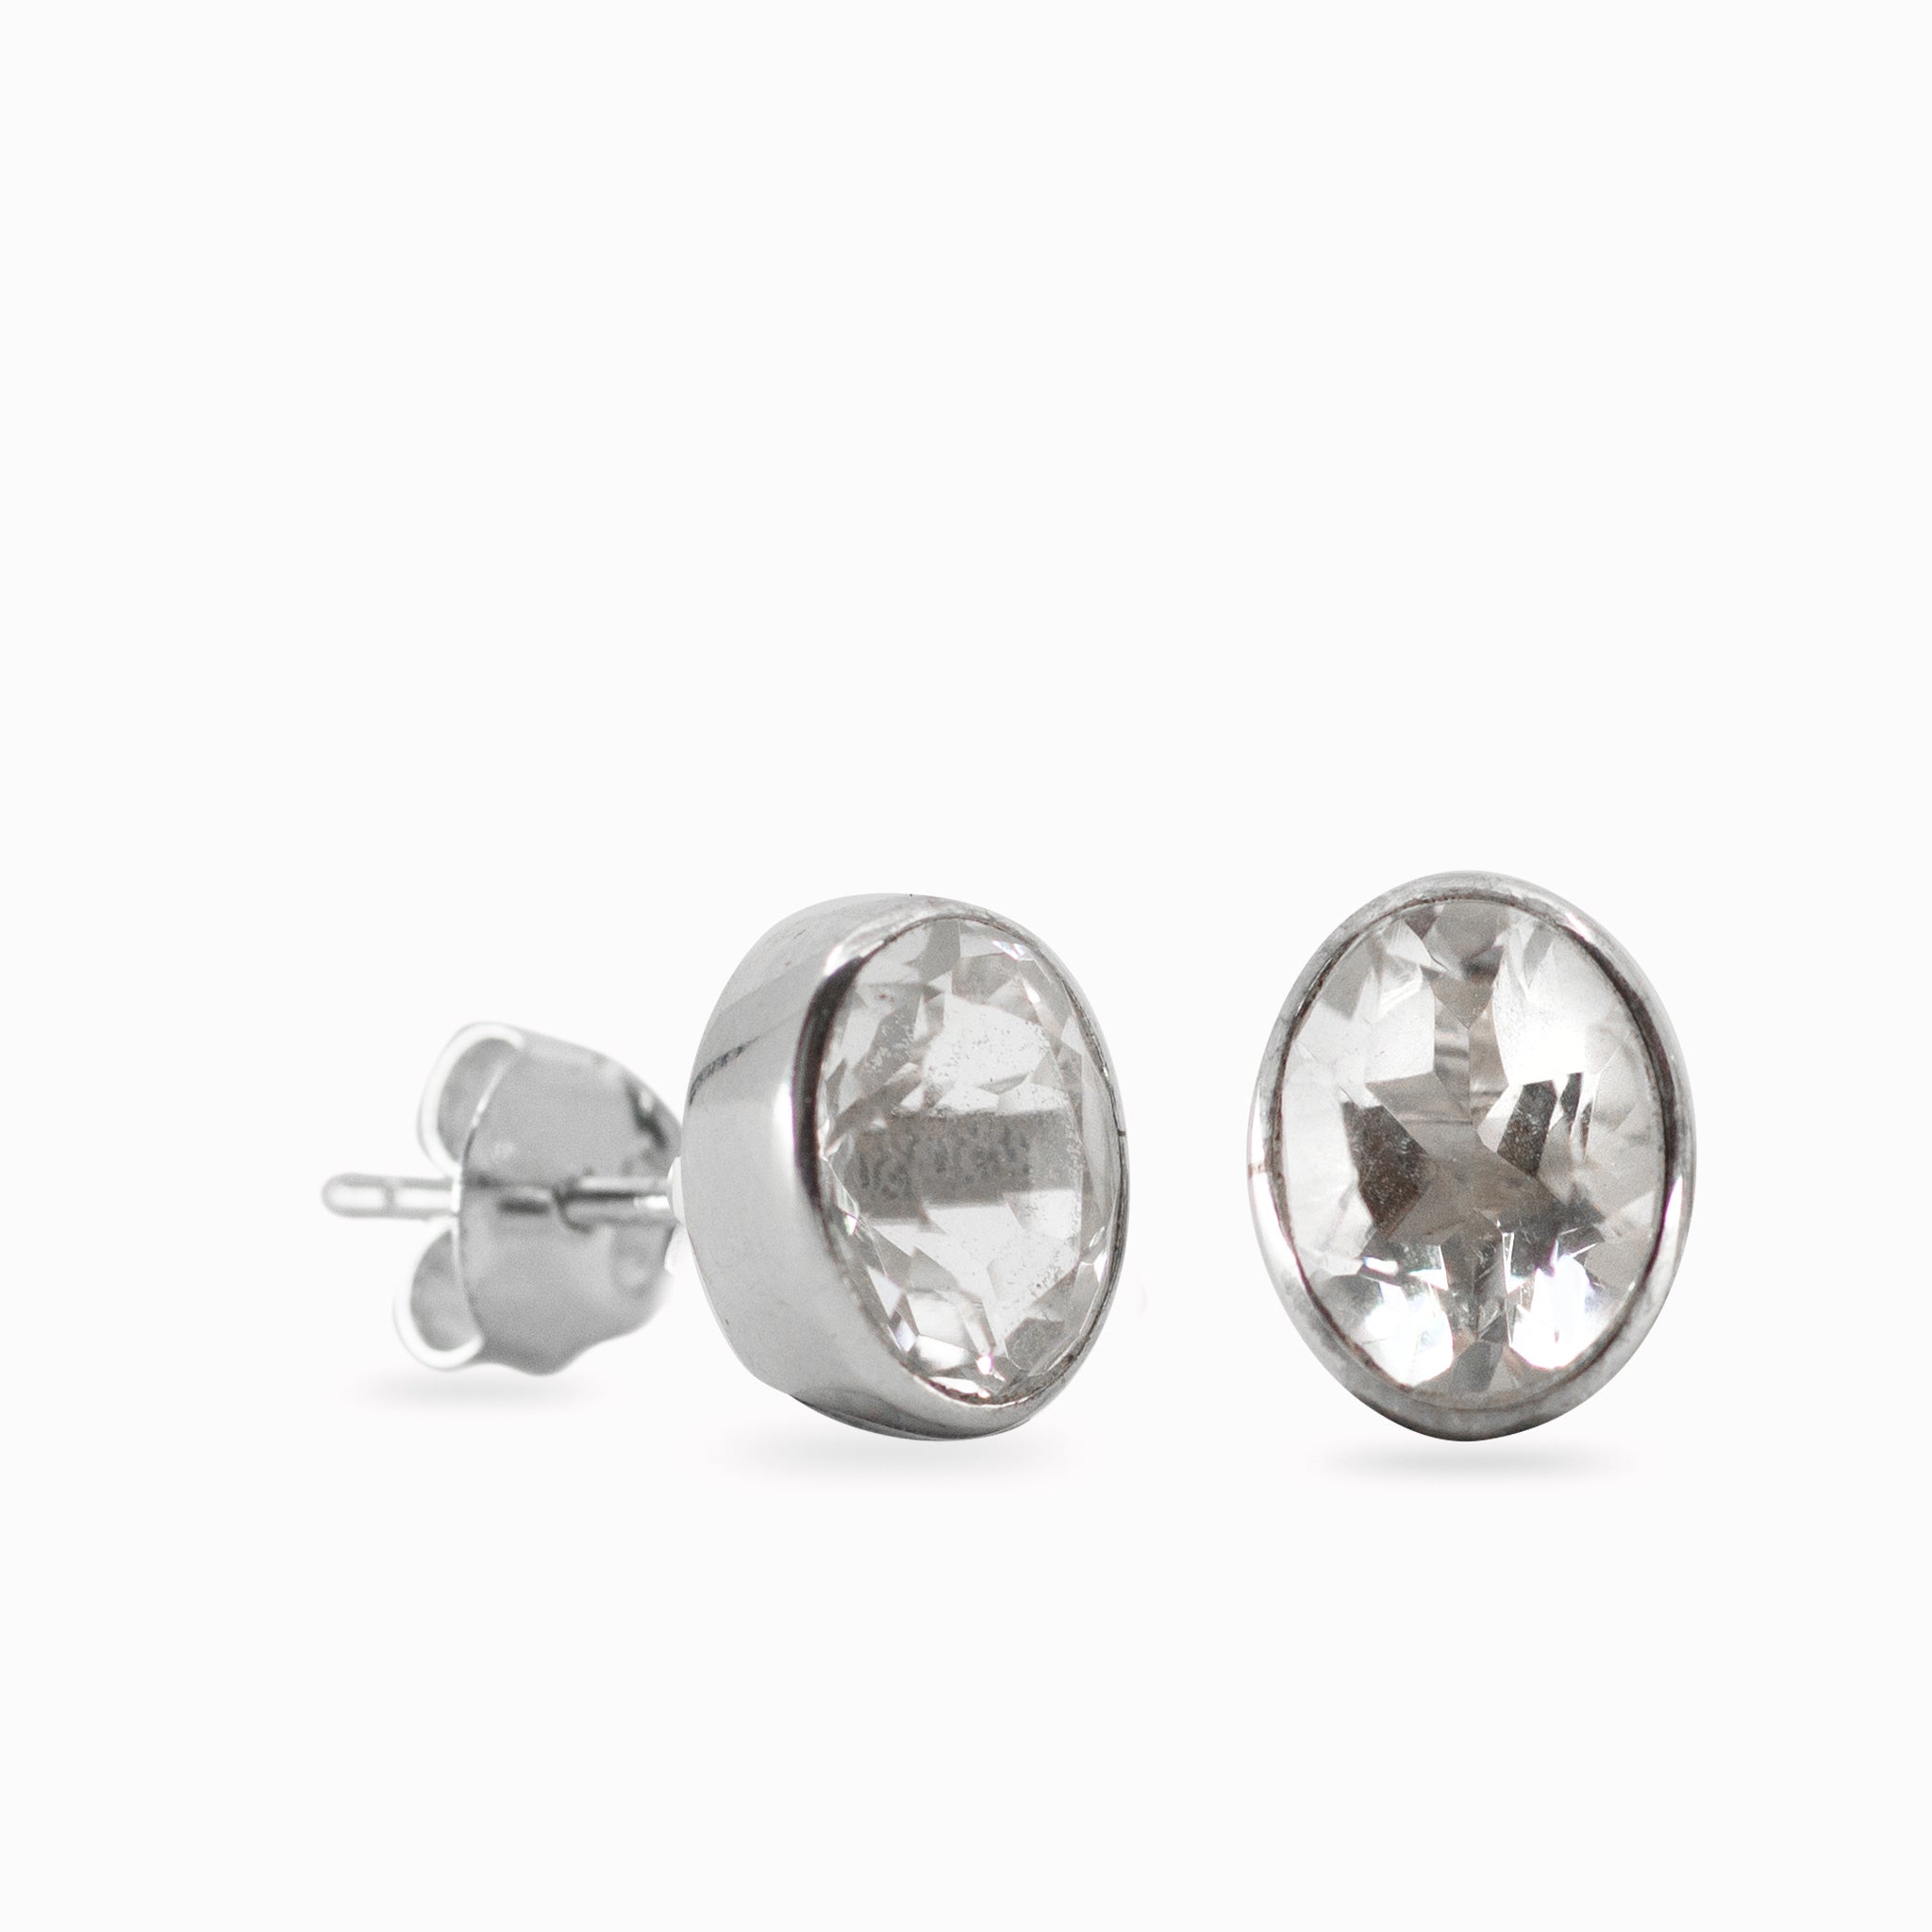 clear quartz earrings